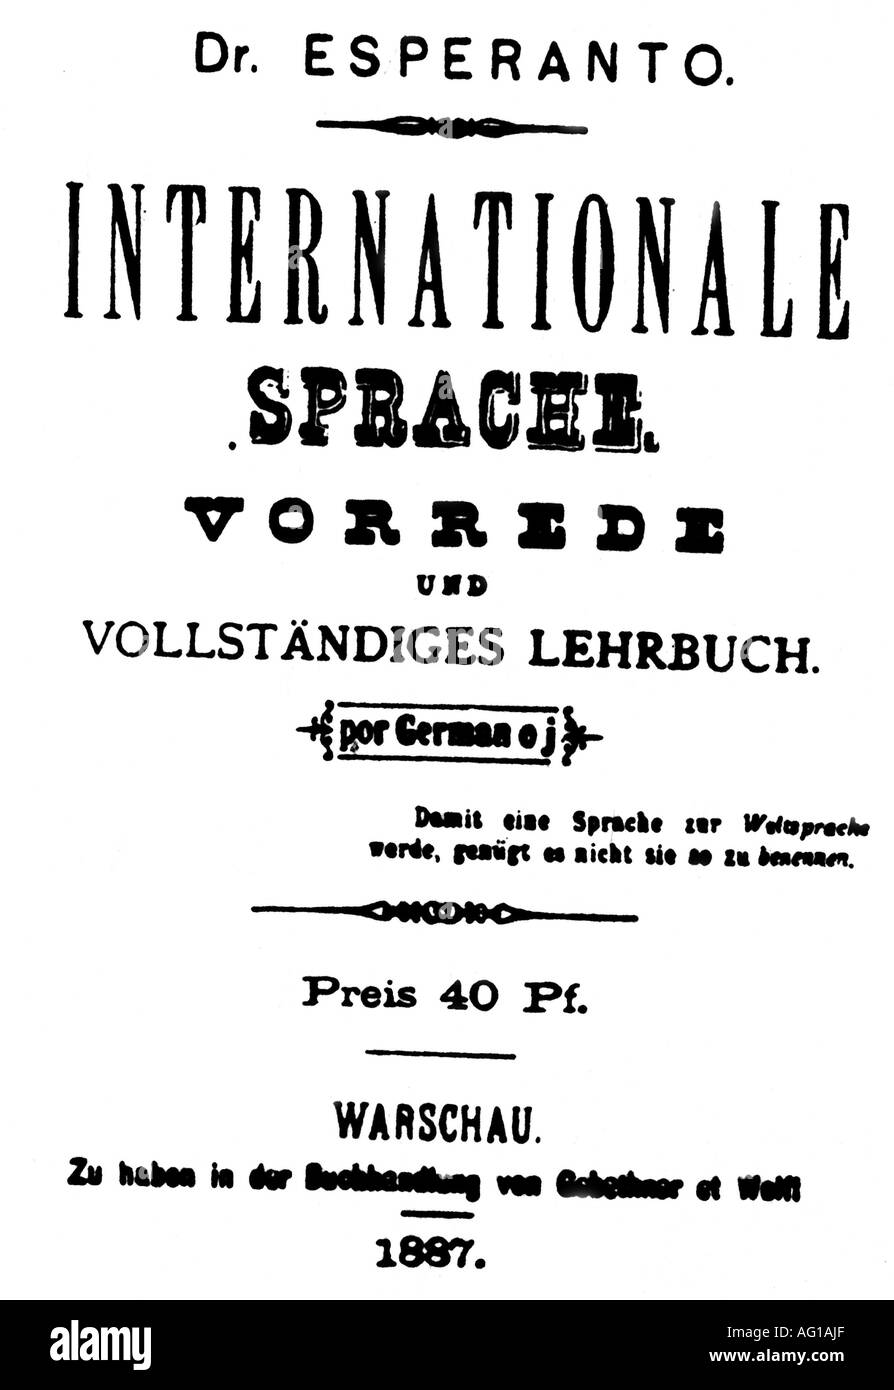 Zahmenhof, Ludwig Lejzer, 15.12.1859 - 14.4.1917, Polish ophthalmologist, initiator of Esperanto, titel of the book 'Internationale Sprache', pseudonym Dr. Esperanto, 1887, Stock Photo